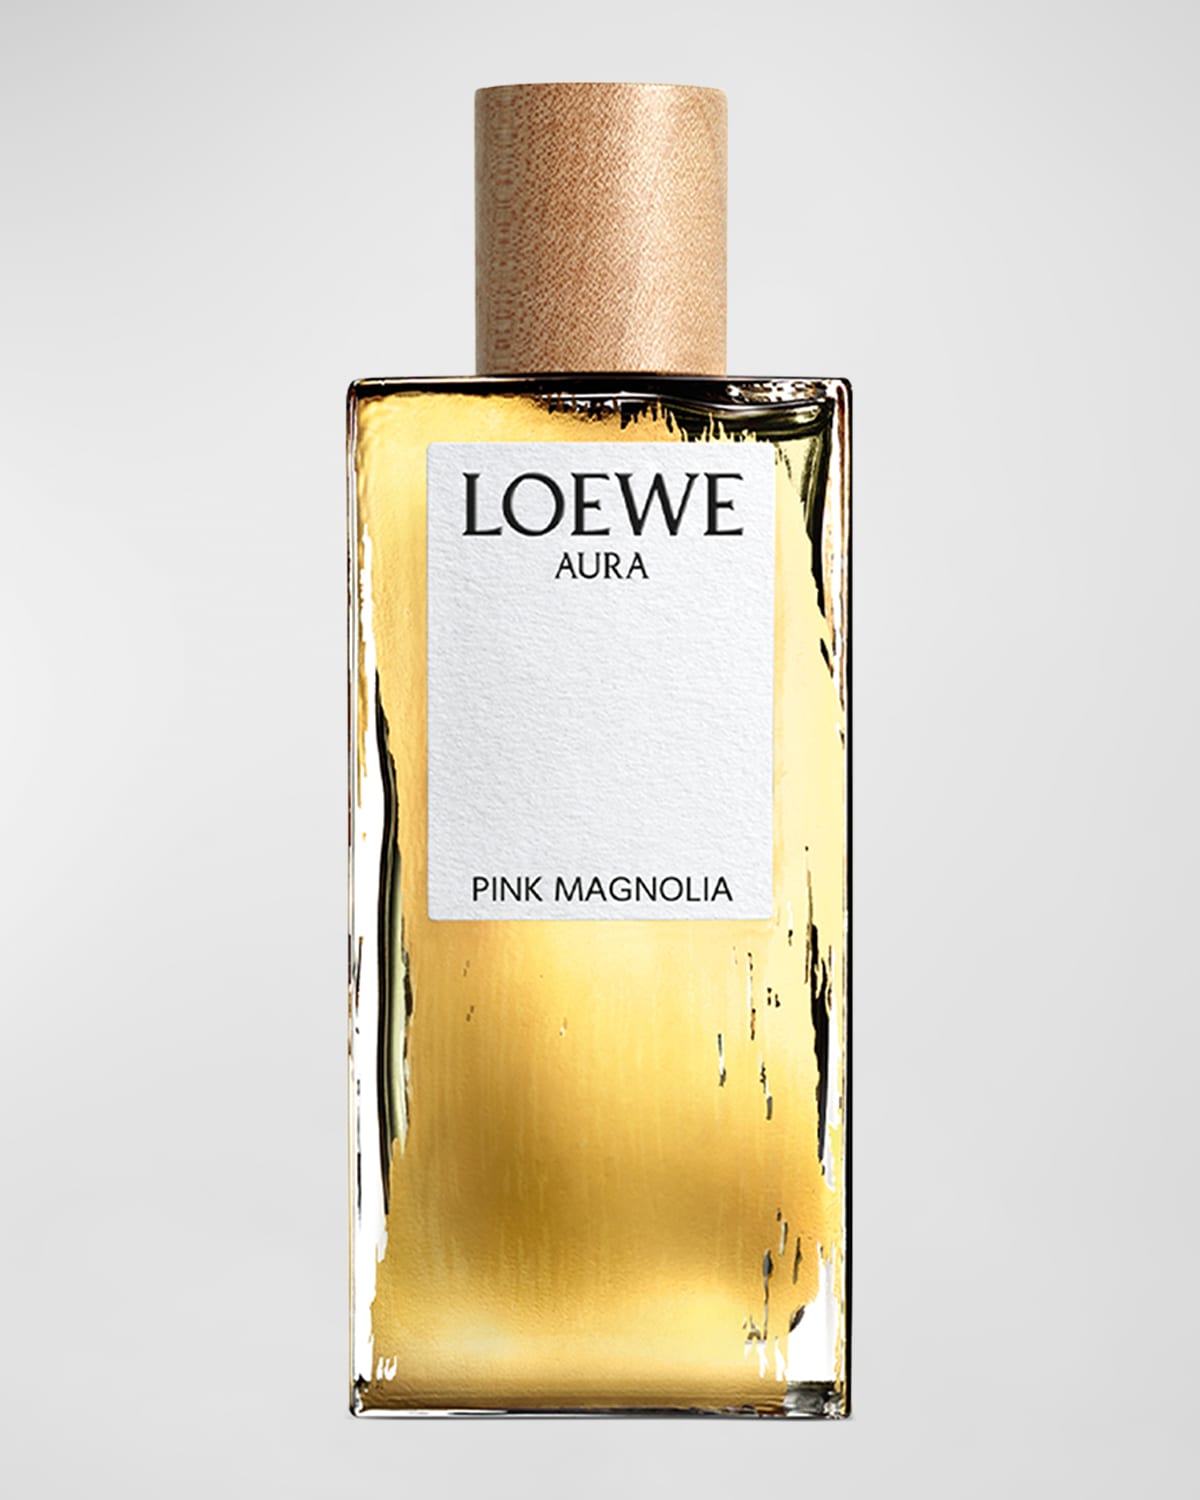 Loewe Aura Pink Magnolia Eau De Parfum, 3.4 Oz. In White